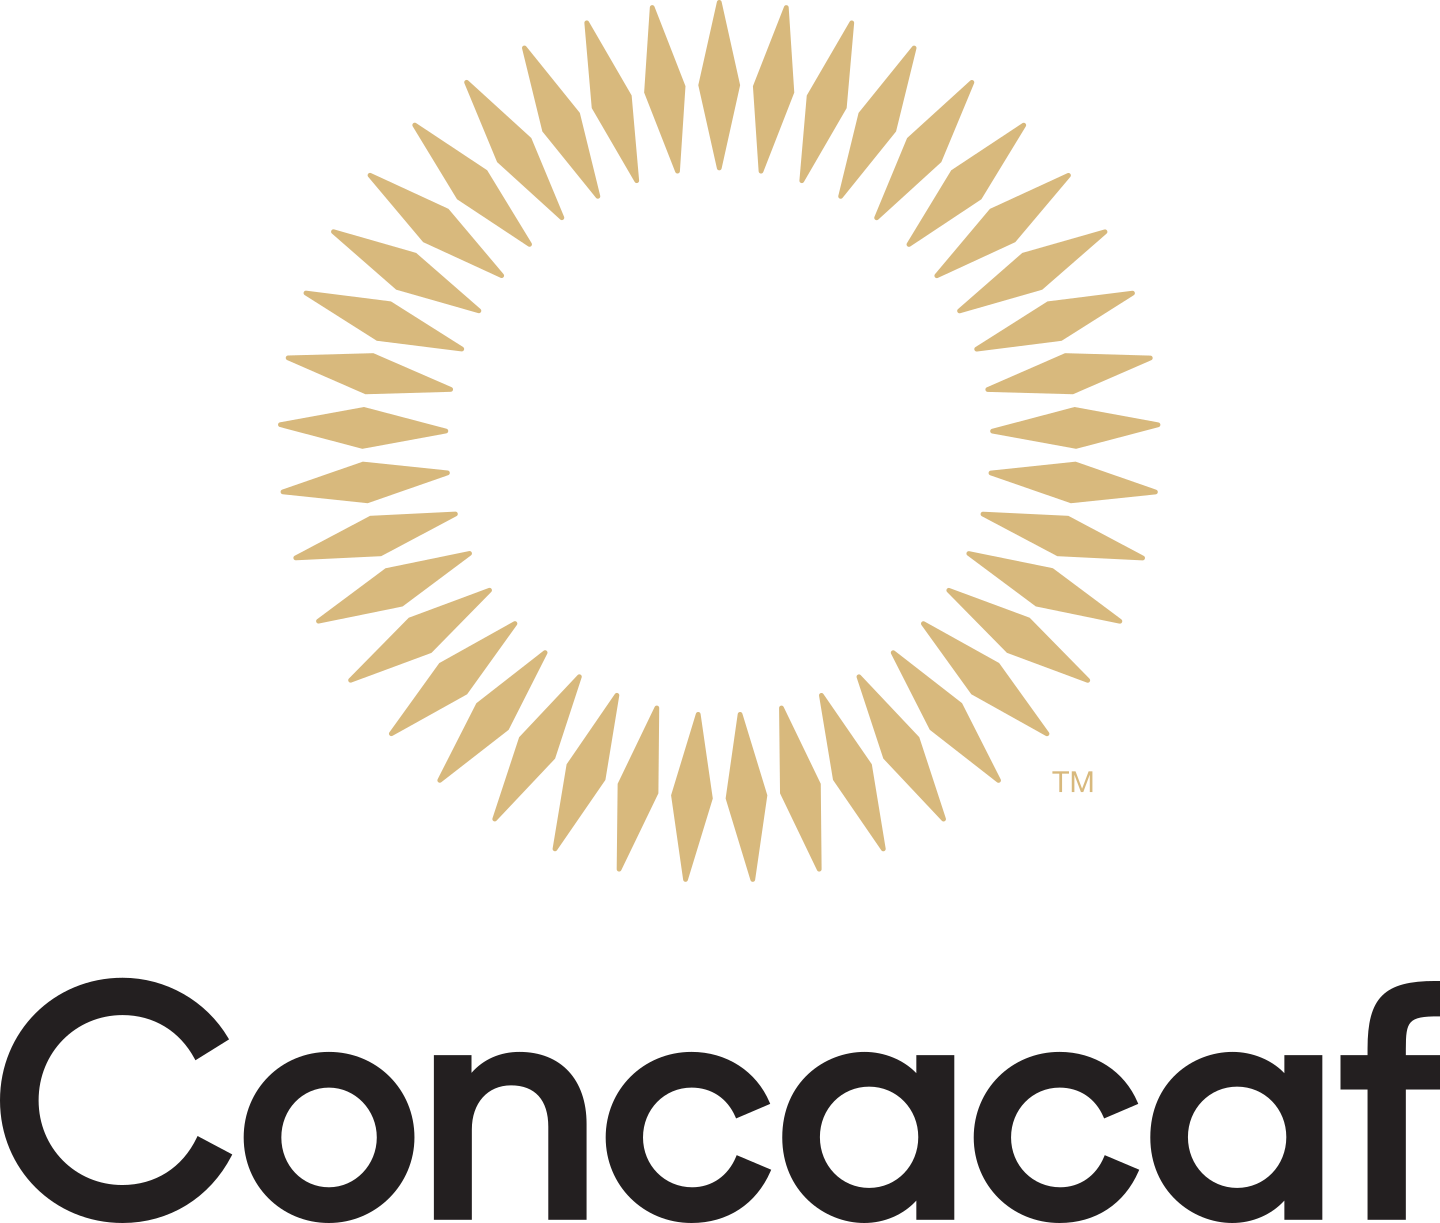 CONCACAF Logo.